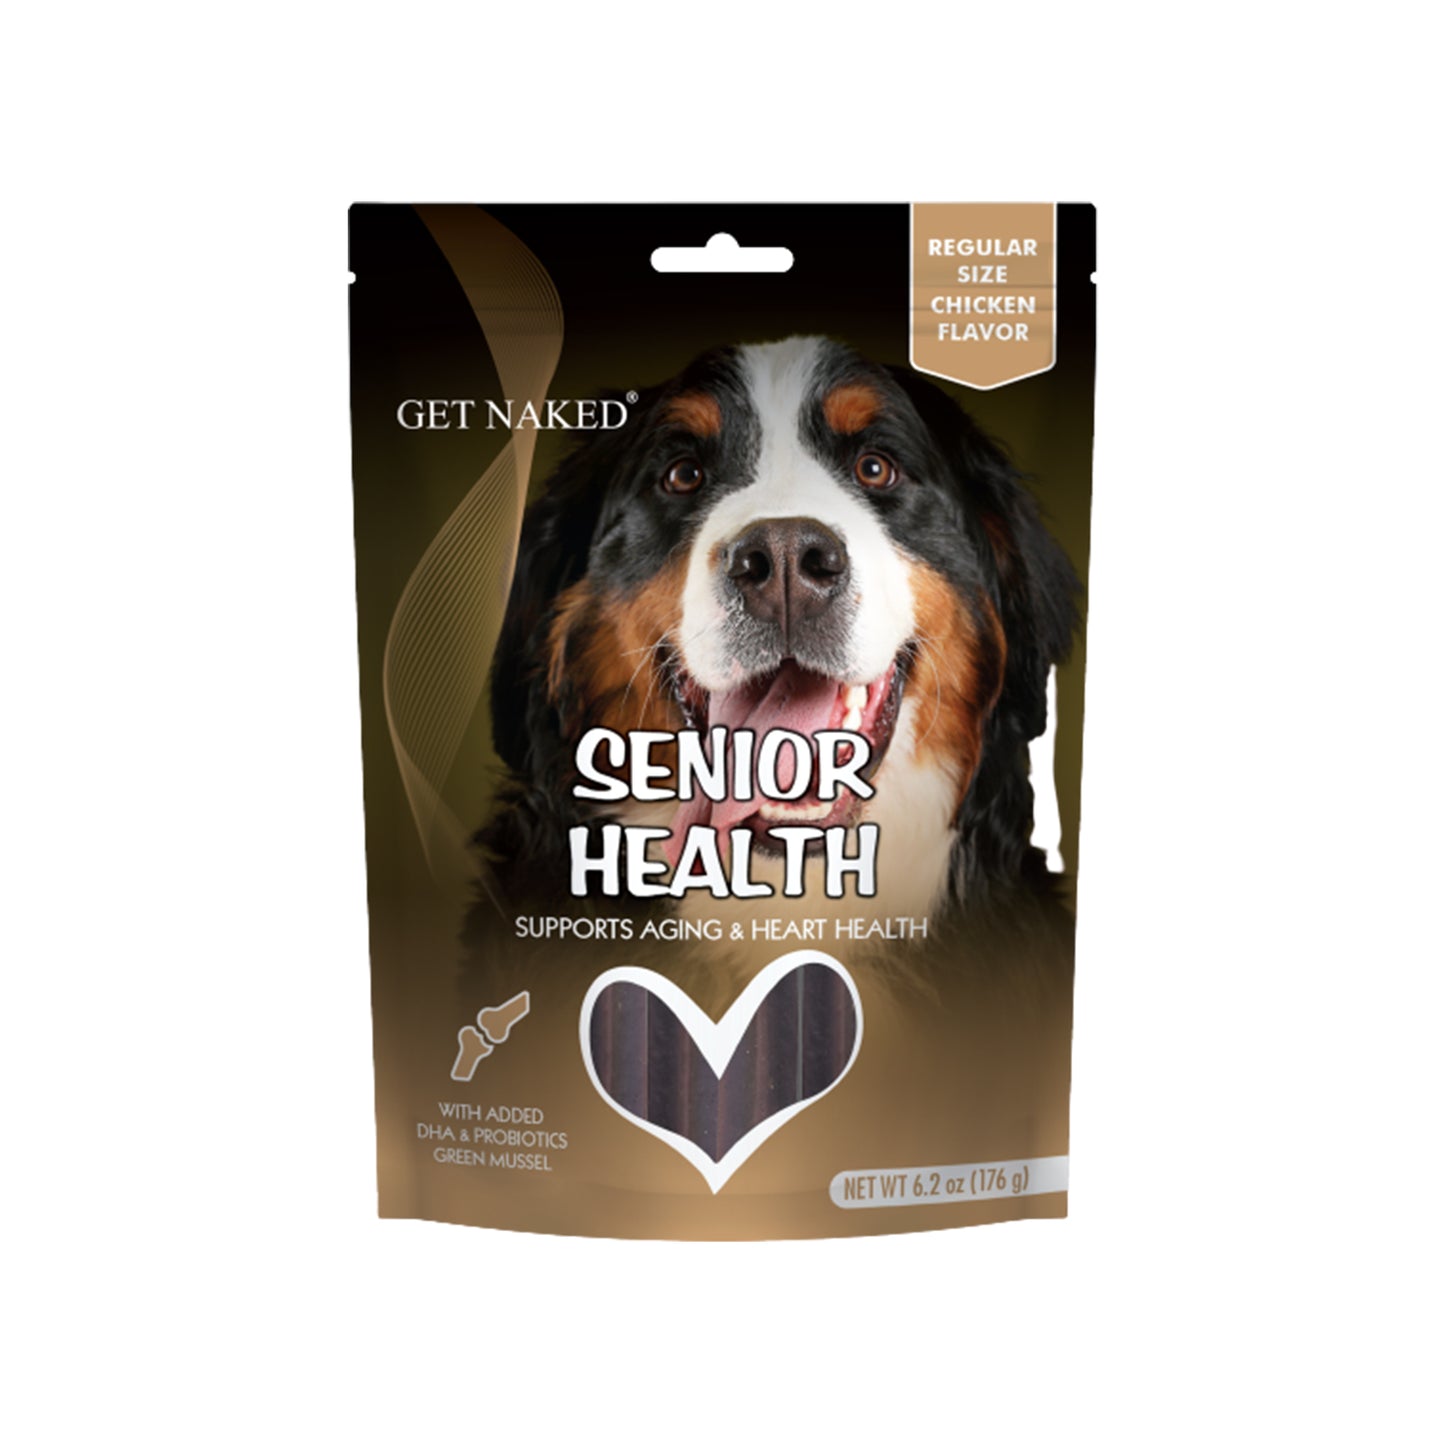 Get Naked - Senior Health Treat for Dogs